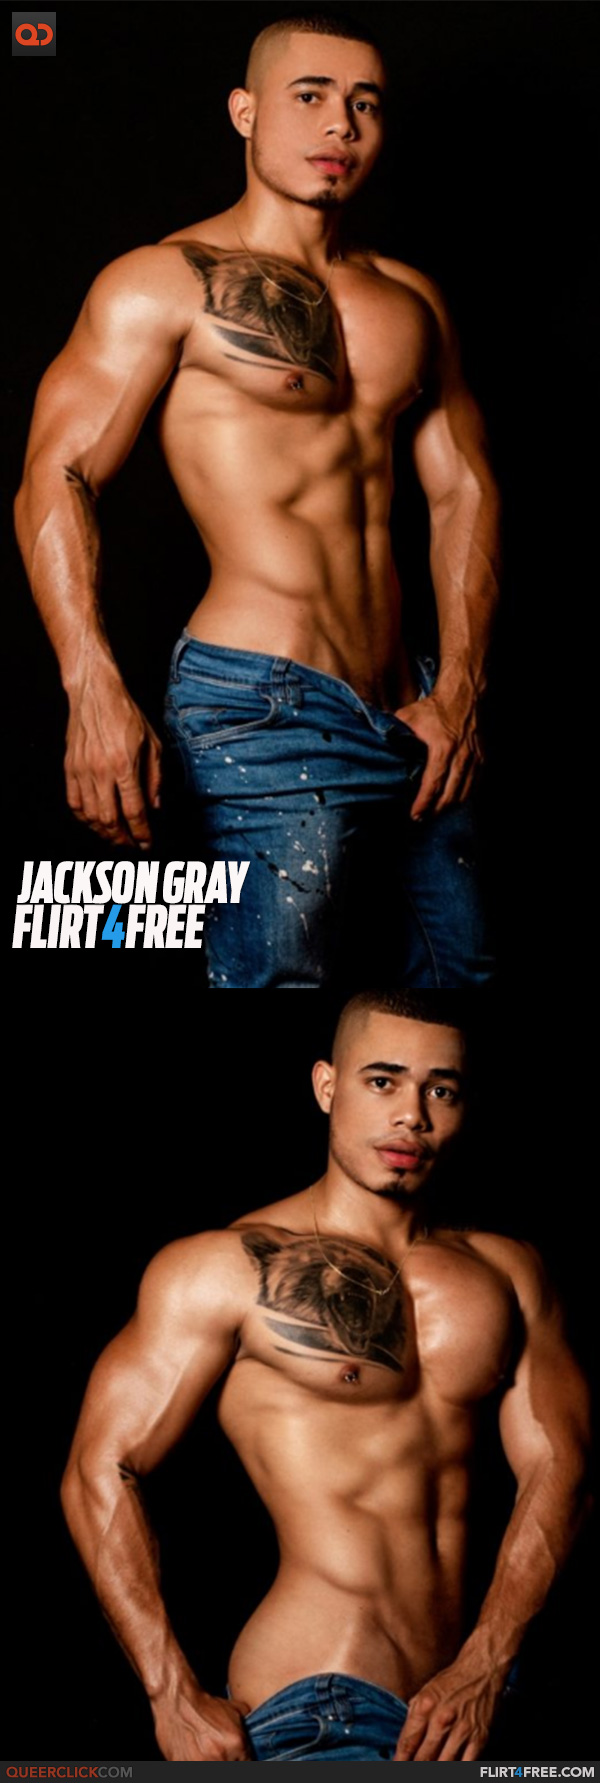 Flirt4Free: Jackson Gray